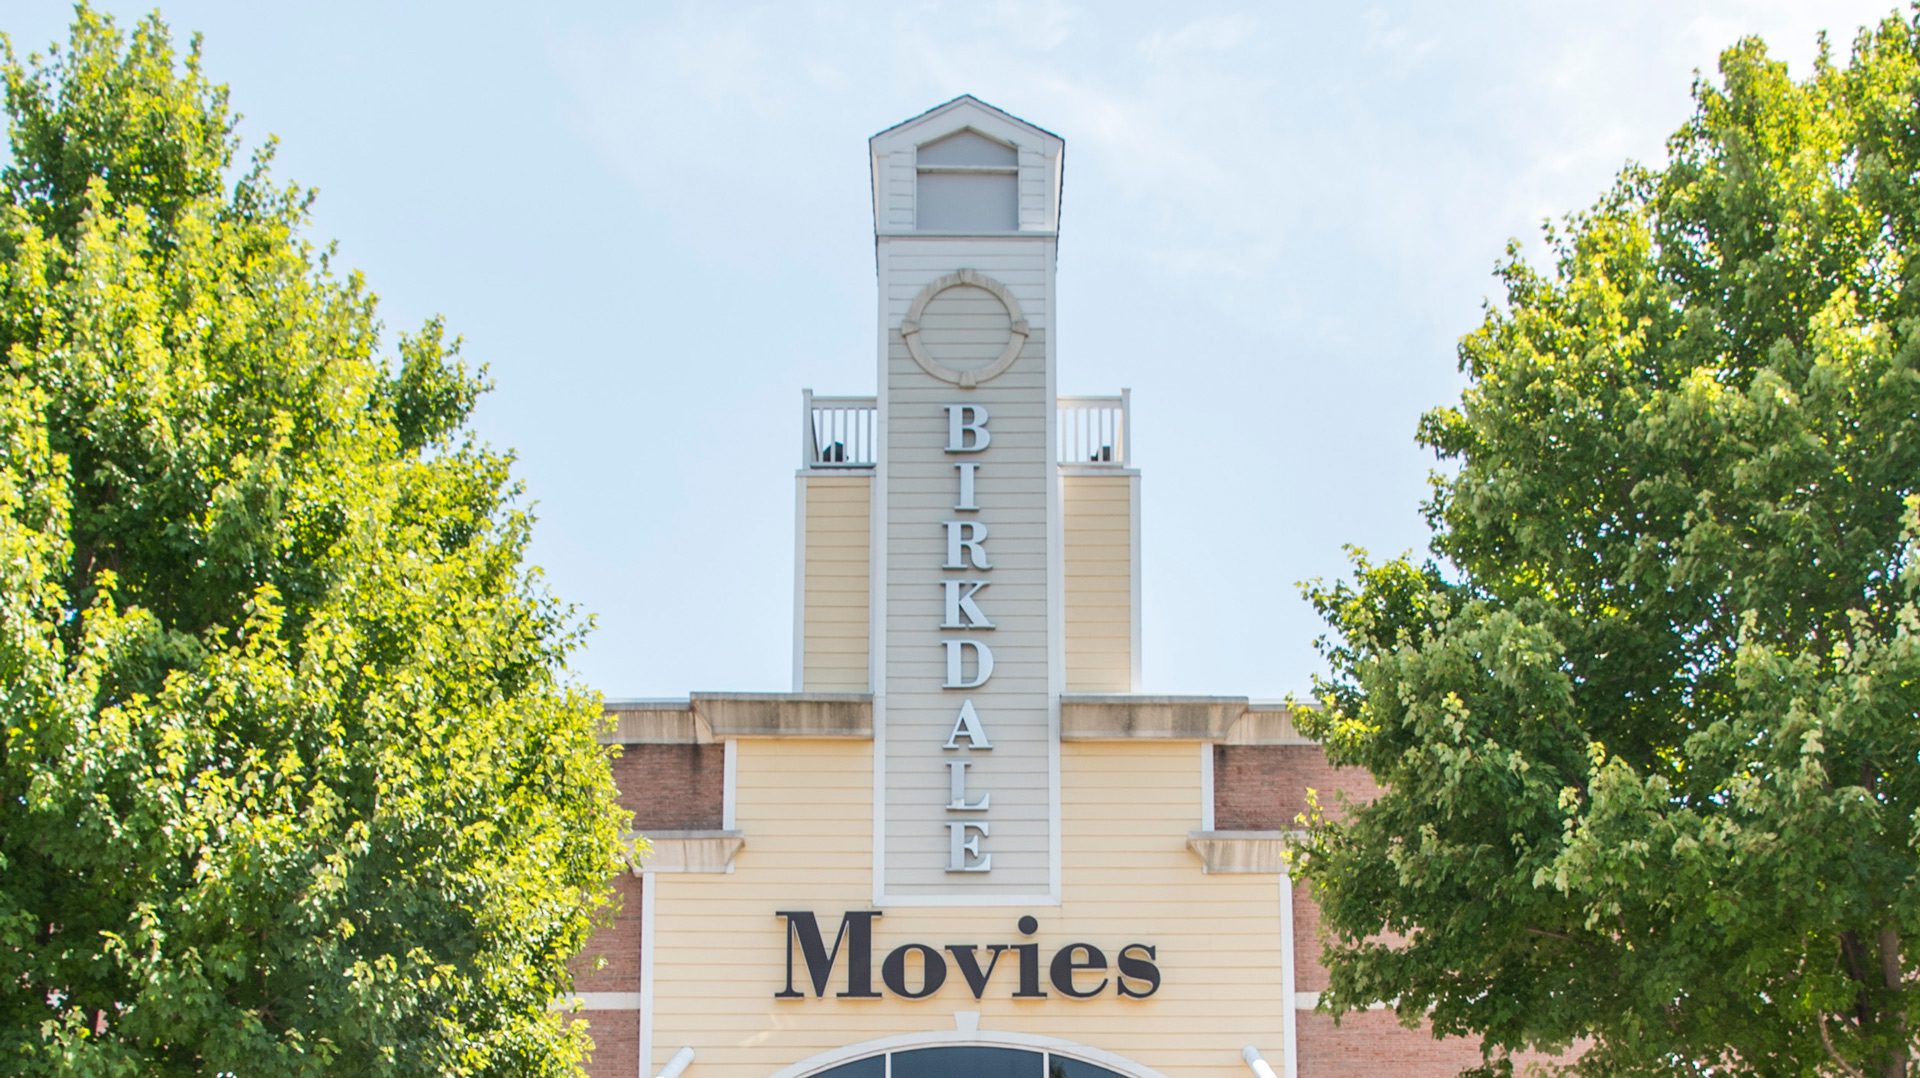 Birkdale Village movie theater